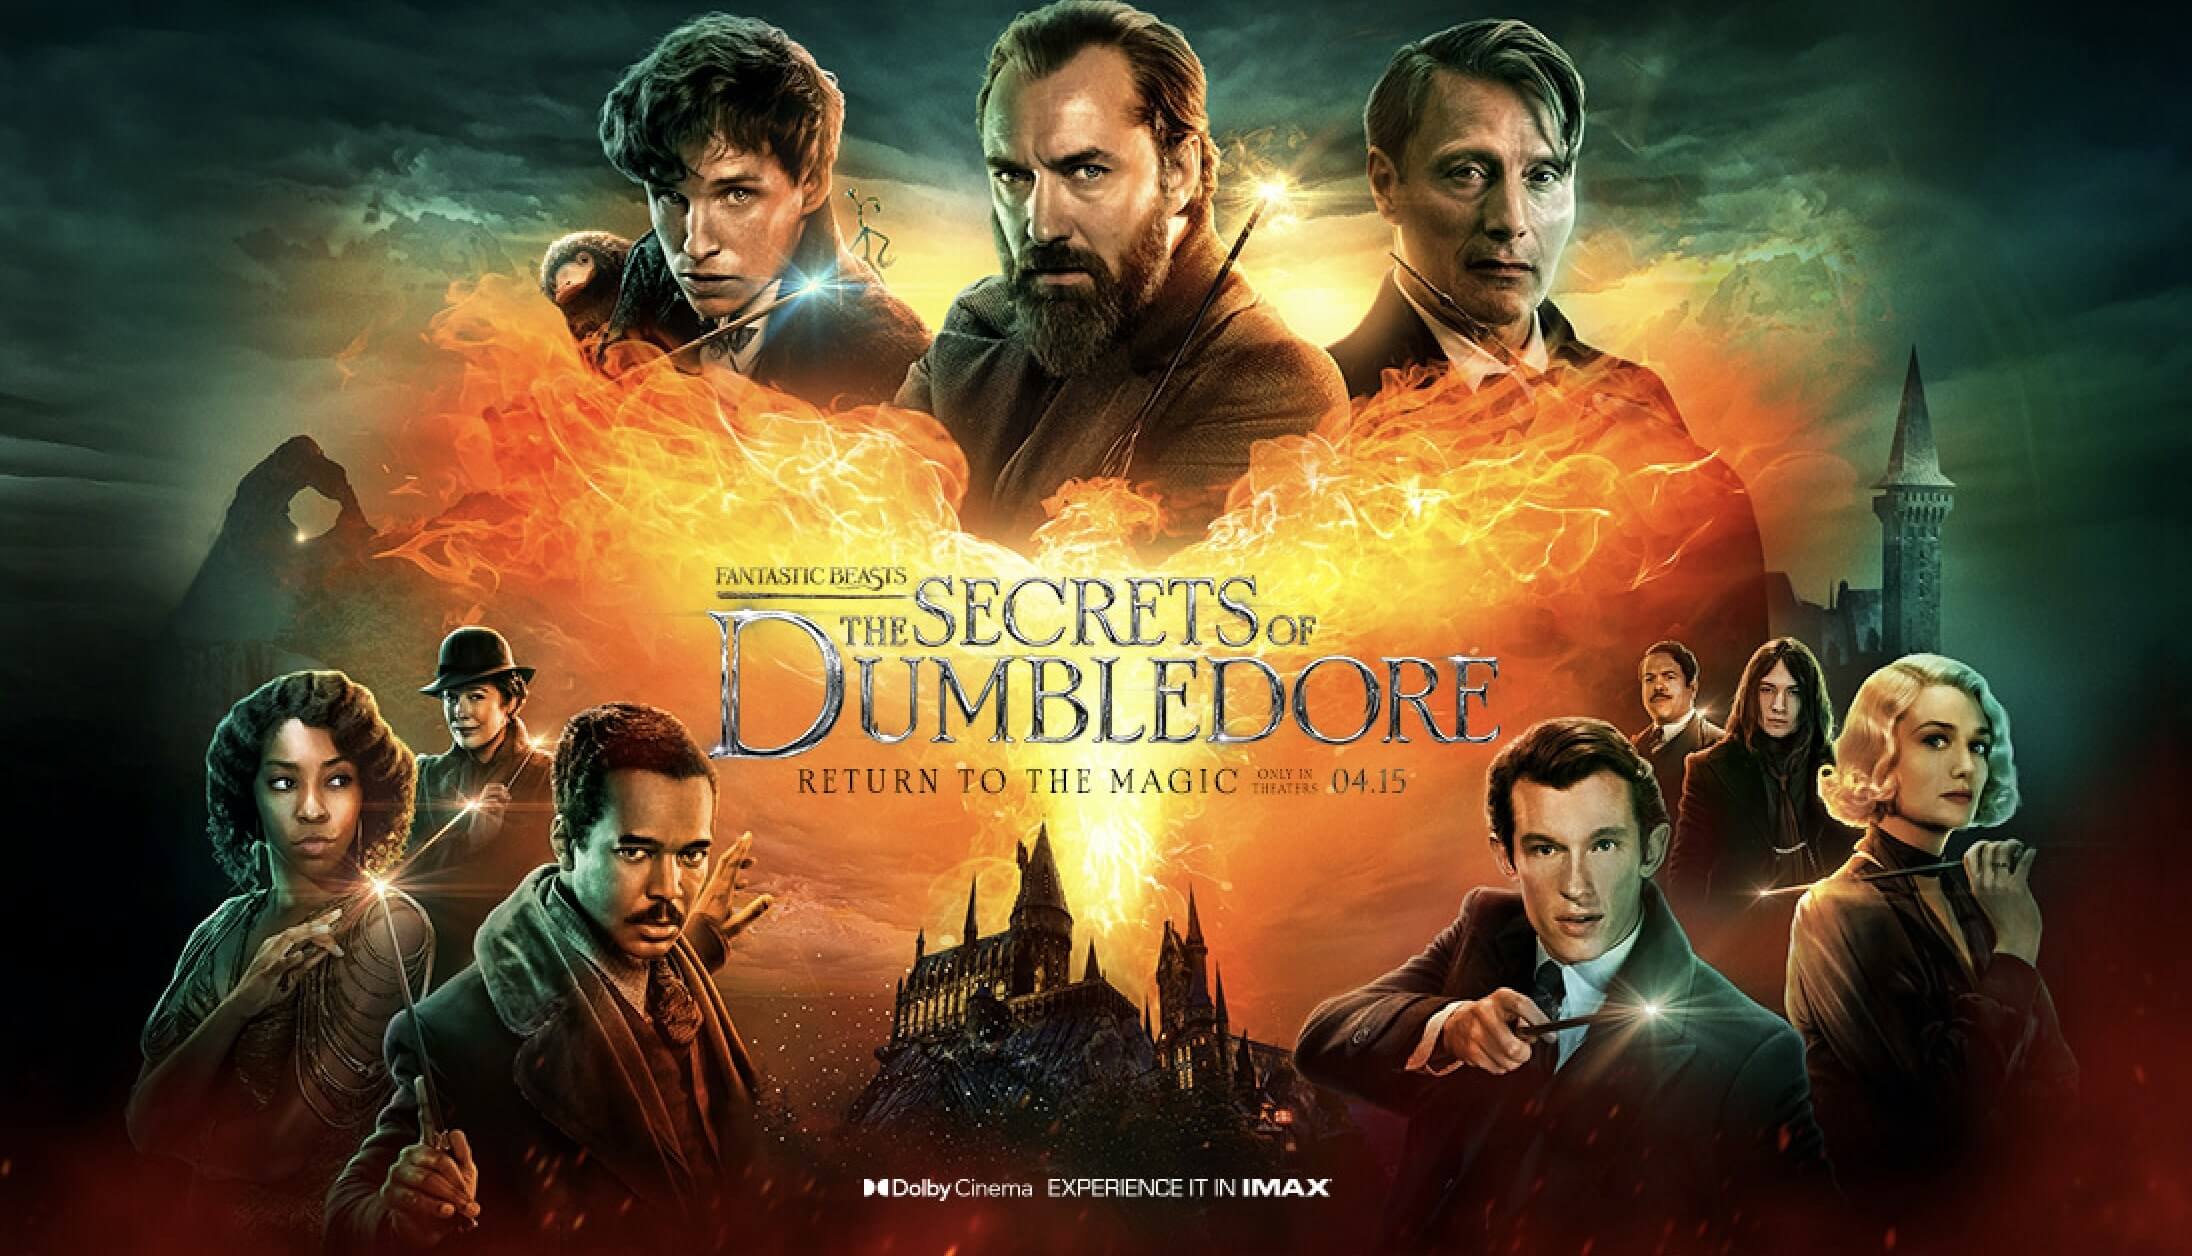  Fantastic-Beasts-3-Secrets-of-Dumbledore-release-date 